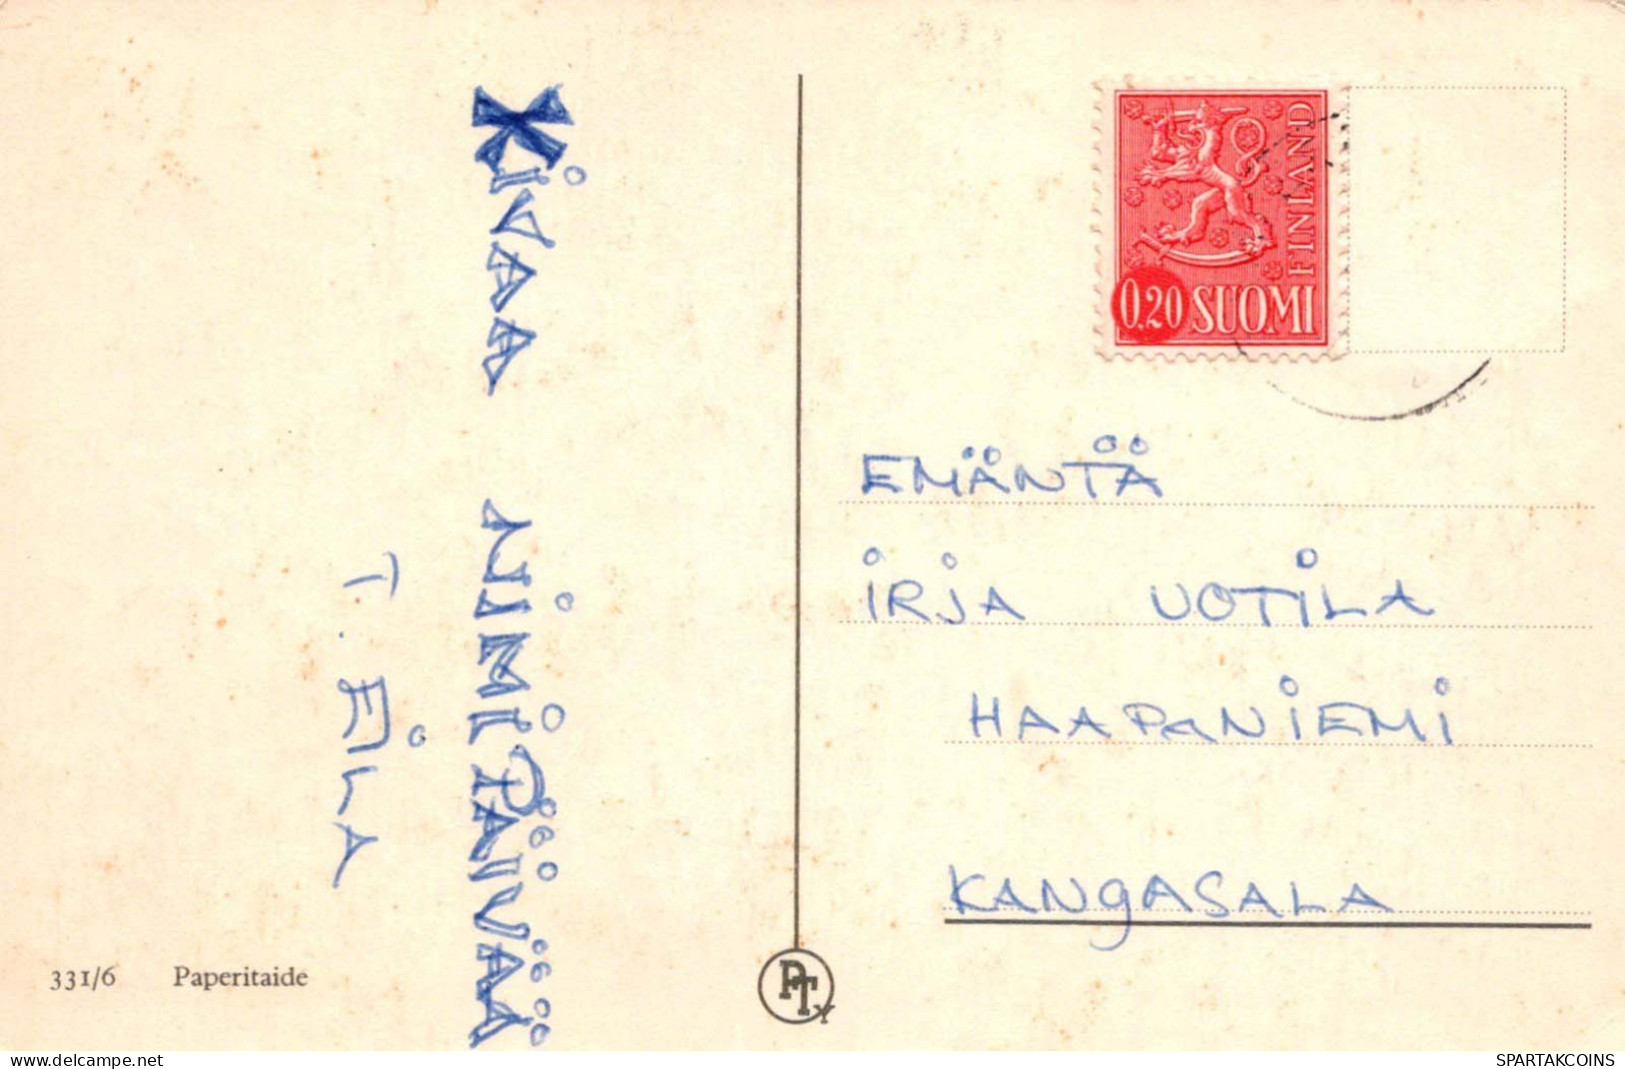 FLORES Vintage Tarjeta Postal CPA #PKE522.A - Flowers